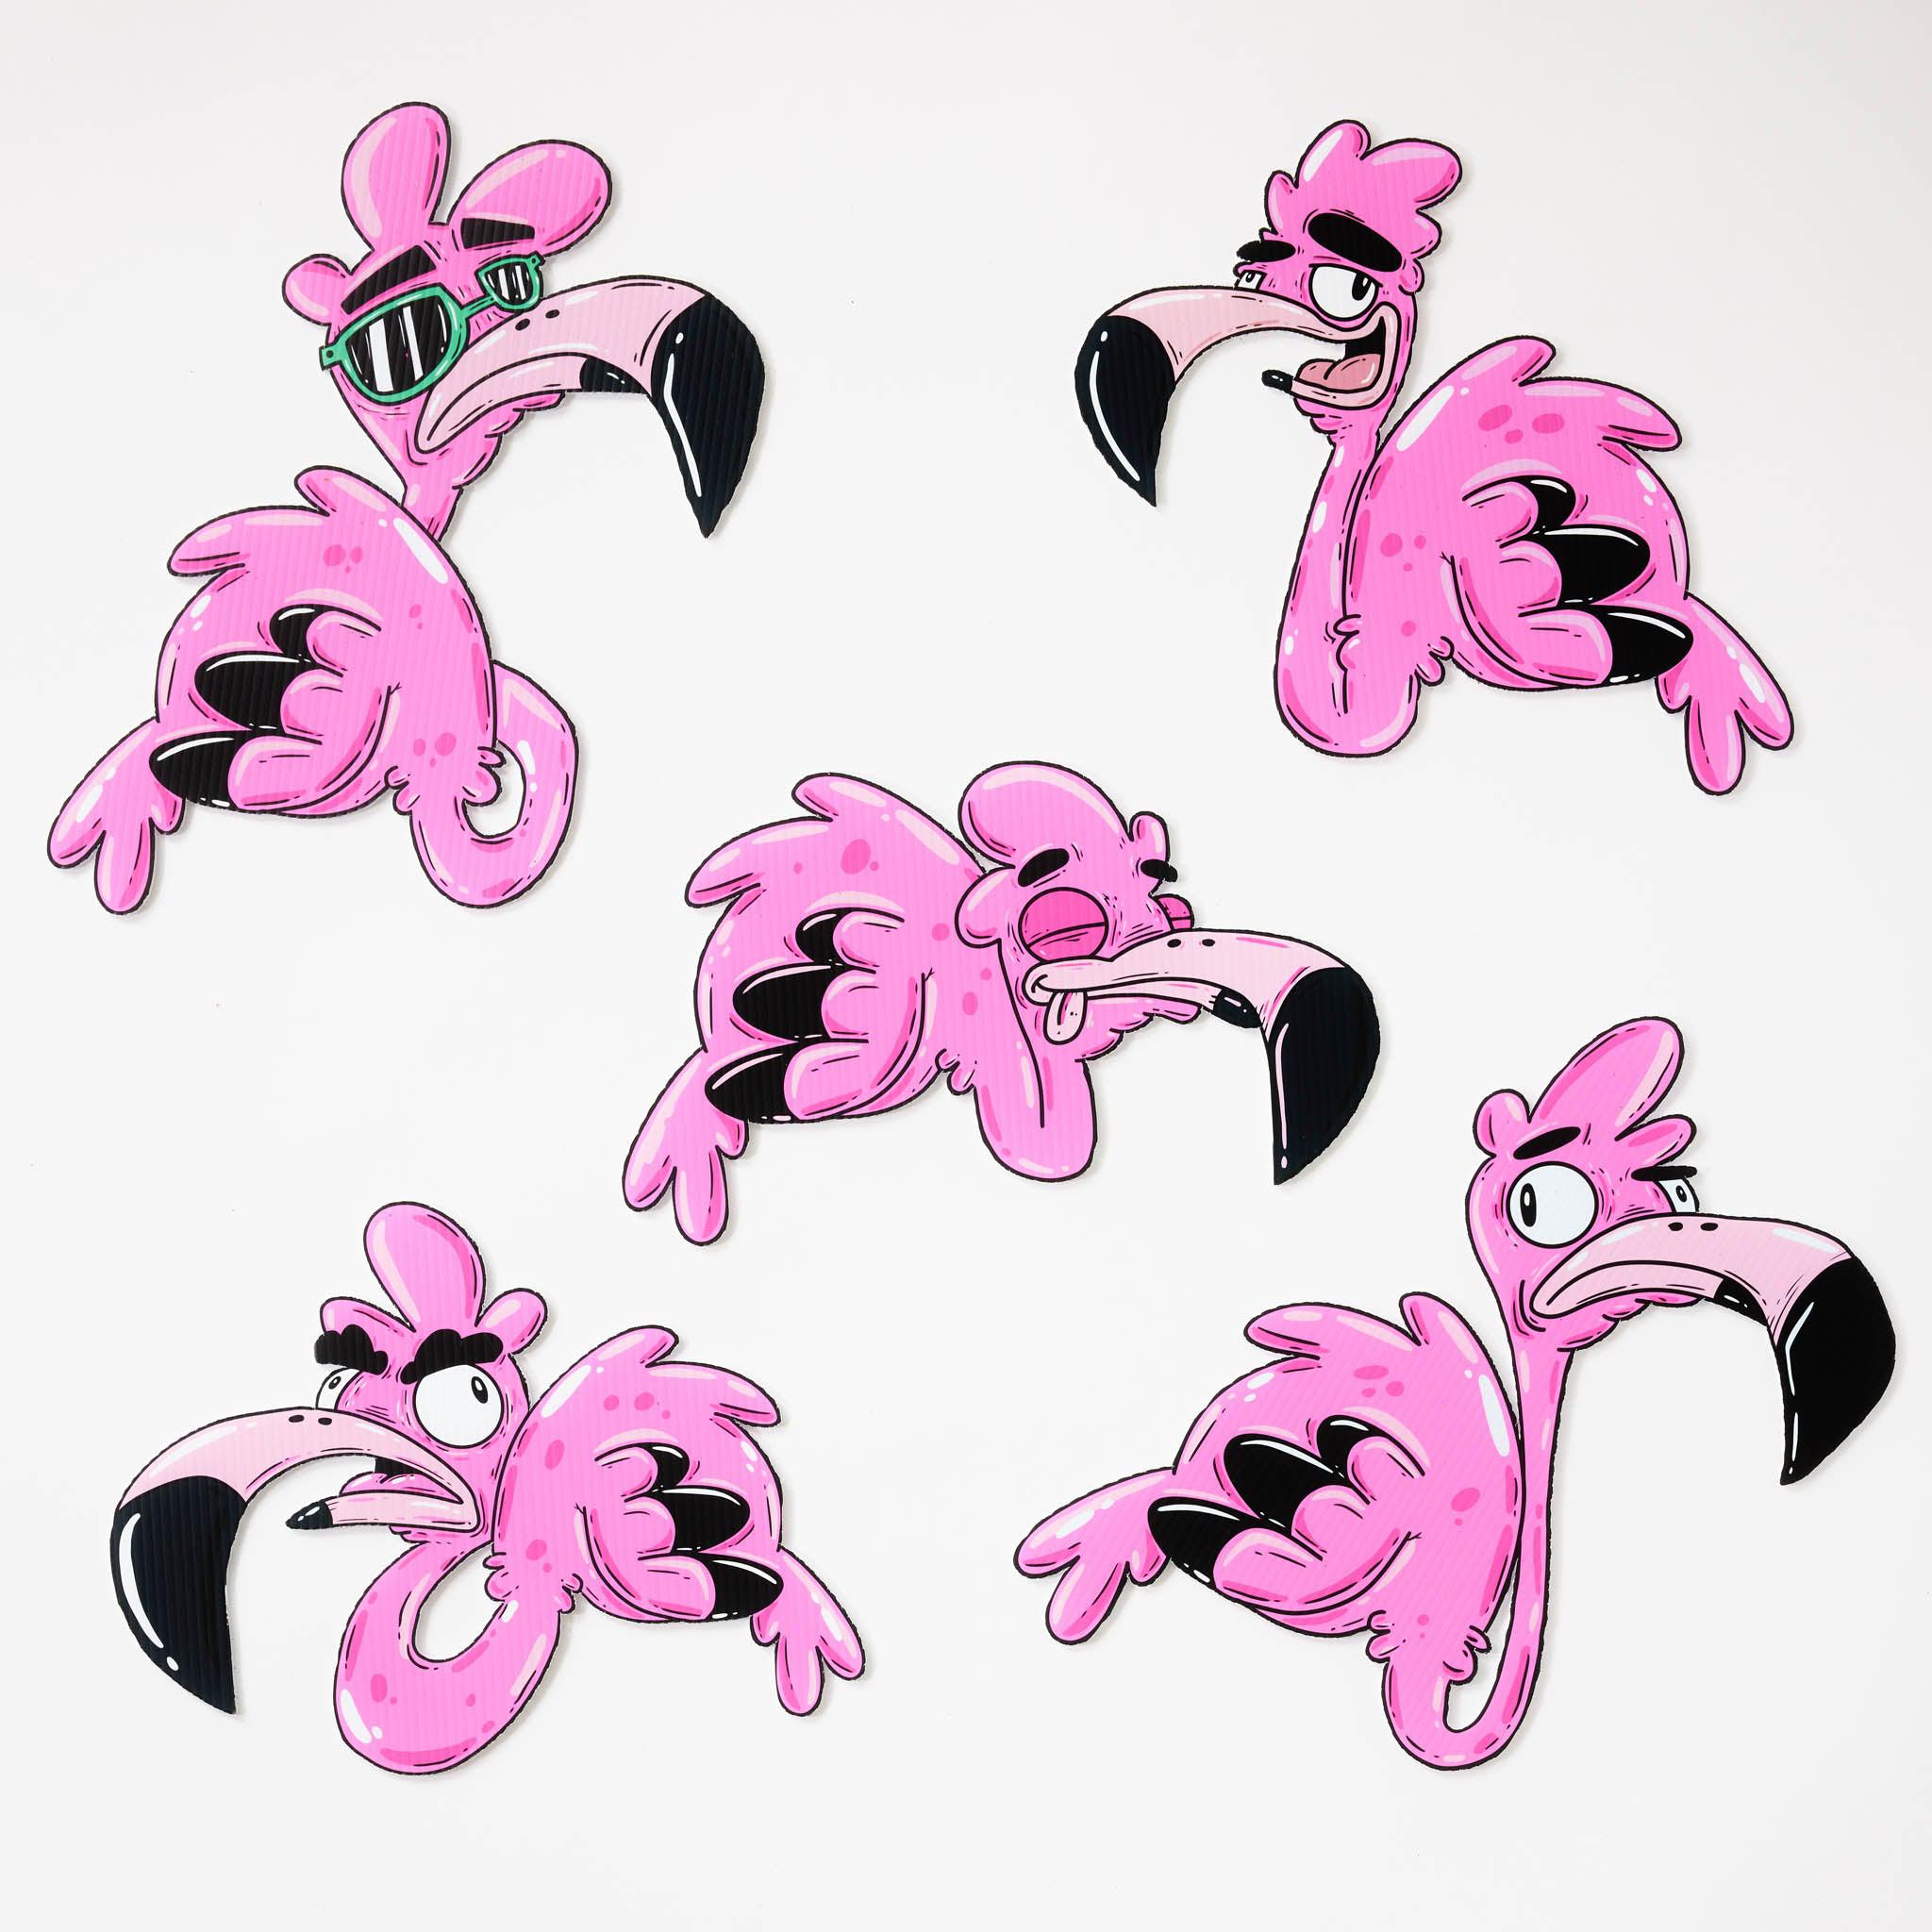 The Flamingo Flock Yard Decoration - 5 Pack